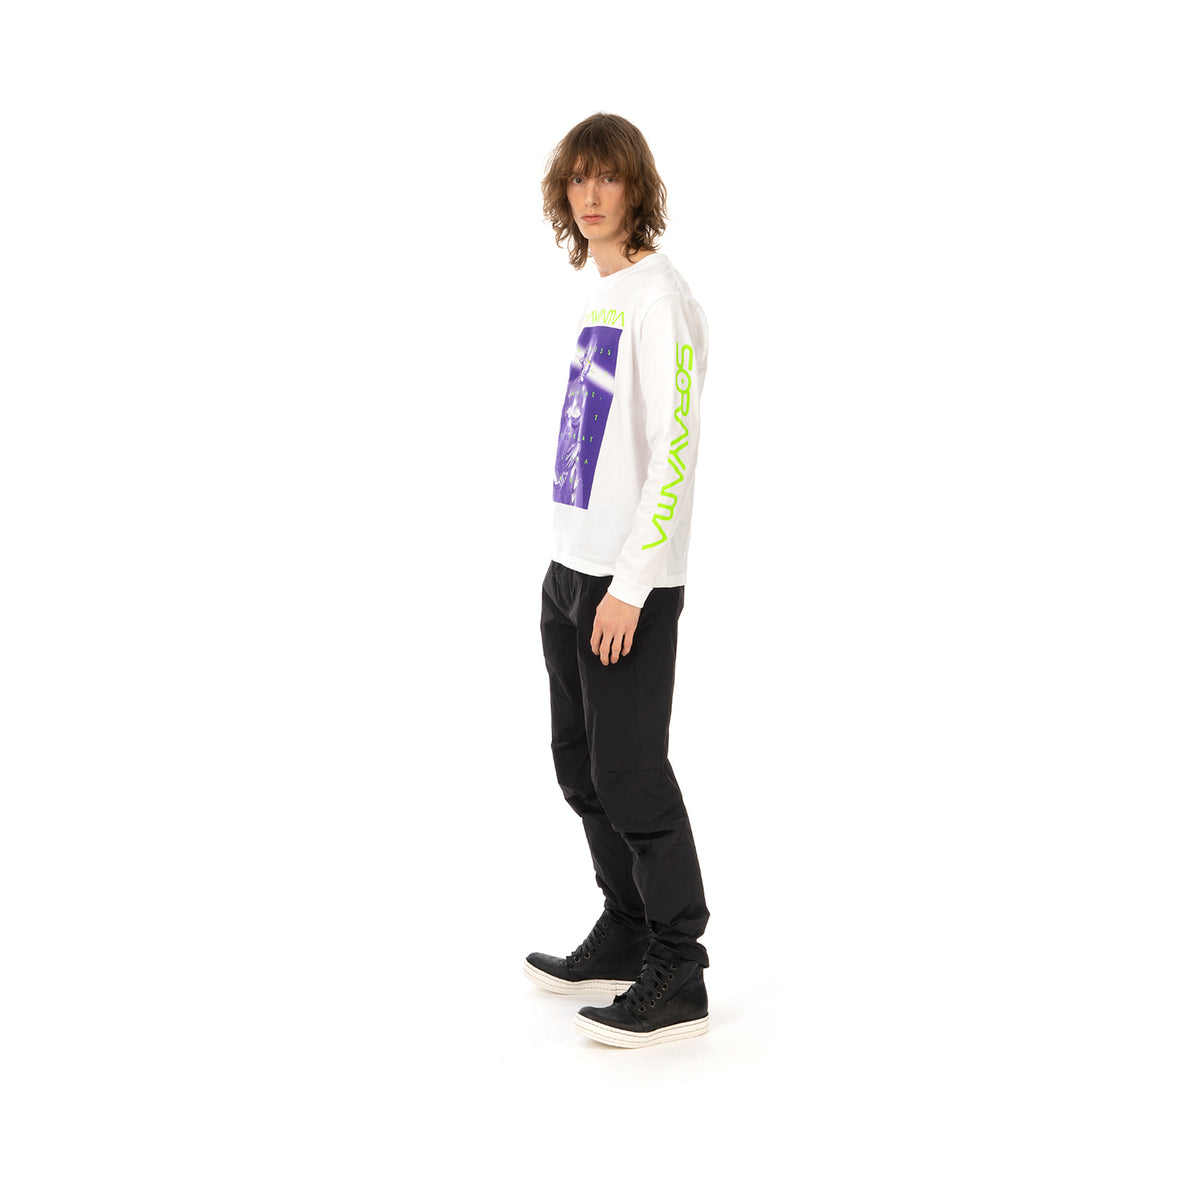 Medicom Toy | x Sorayama 'Sexy Robot 01' L/S T-Shirt White - Concrete